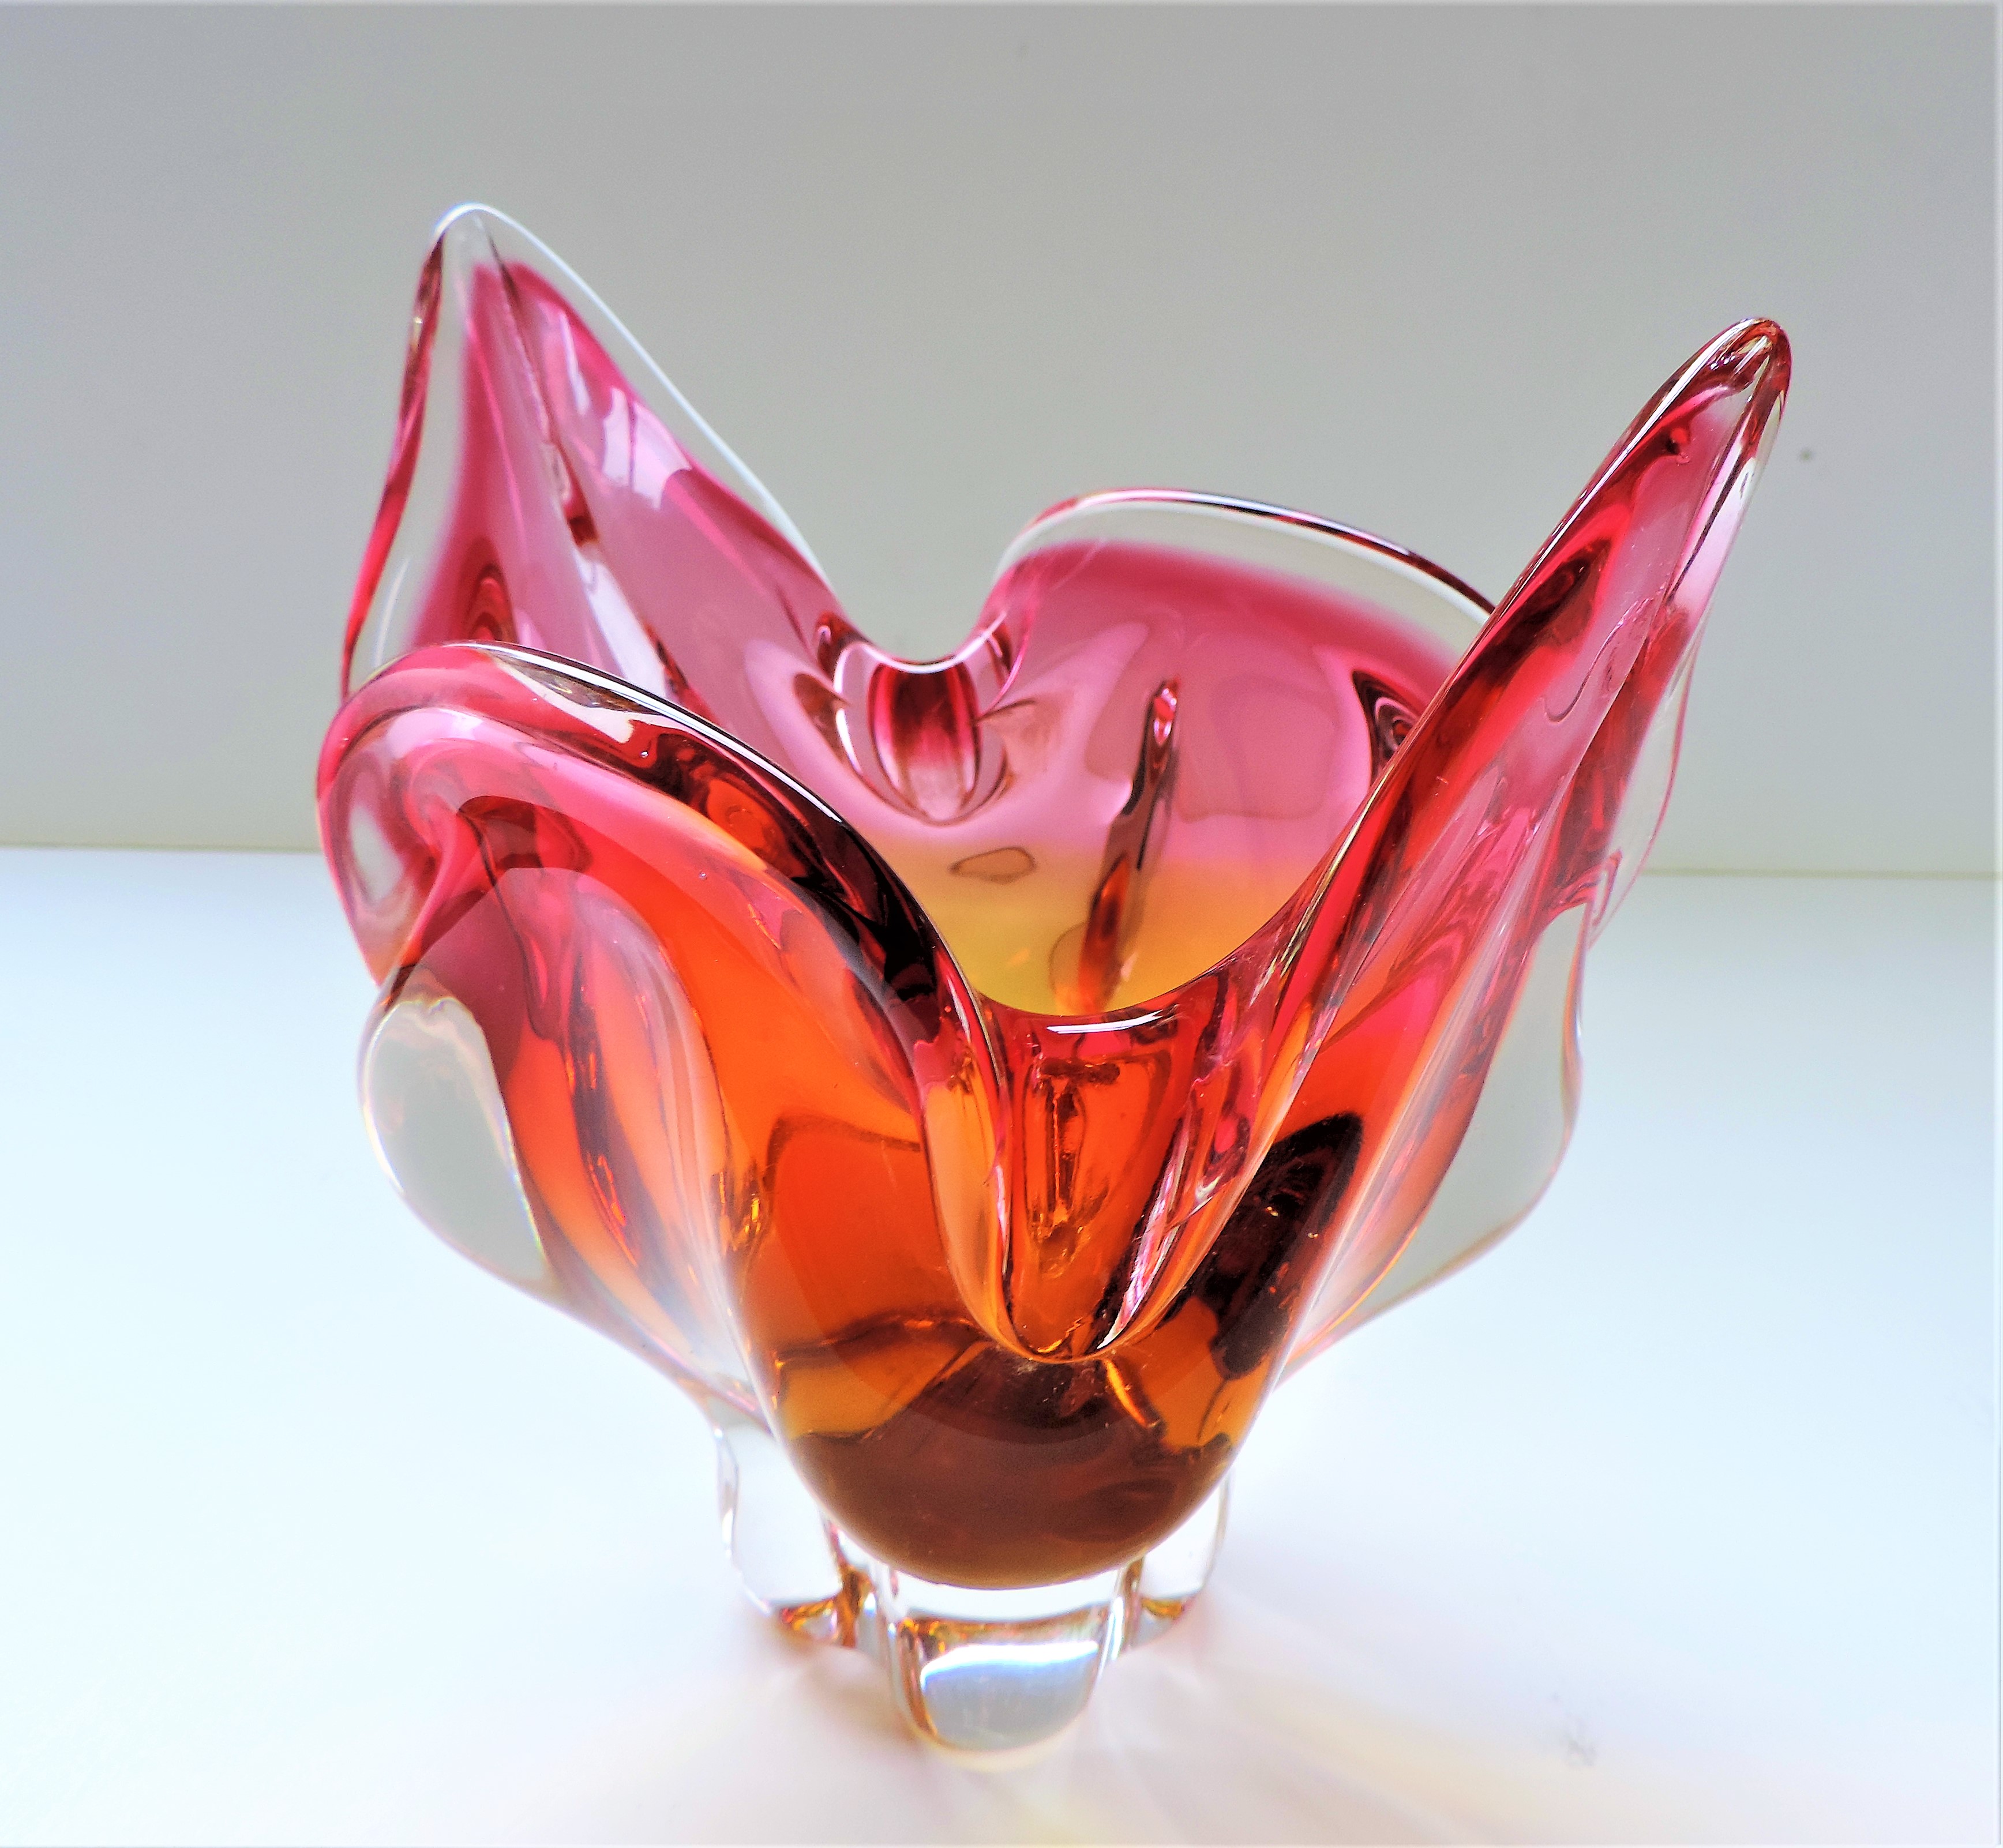 Vintage Art Glass Bowl By Josef Hospodka For Chribska Glassworks c. 1960's